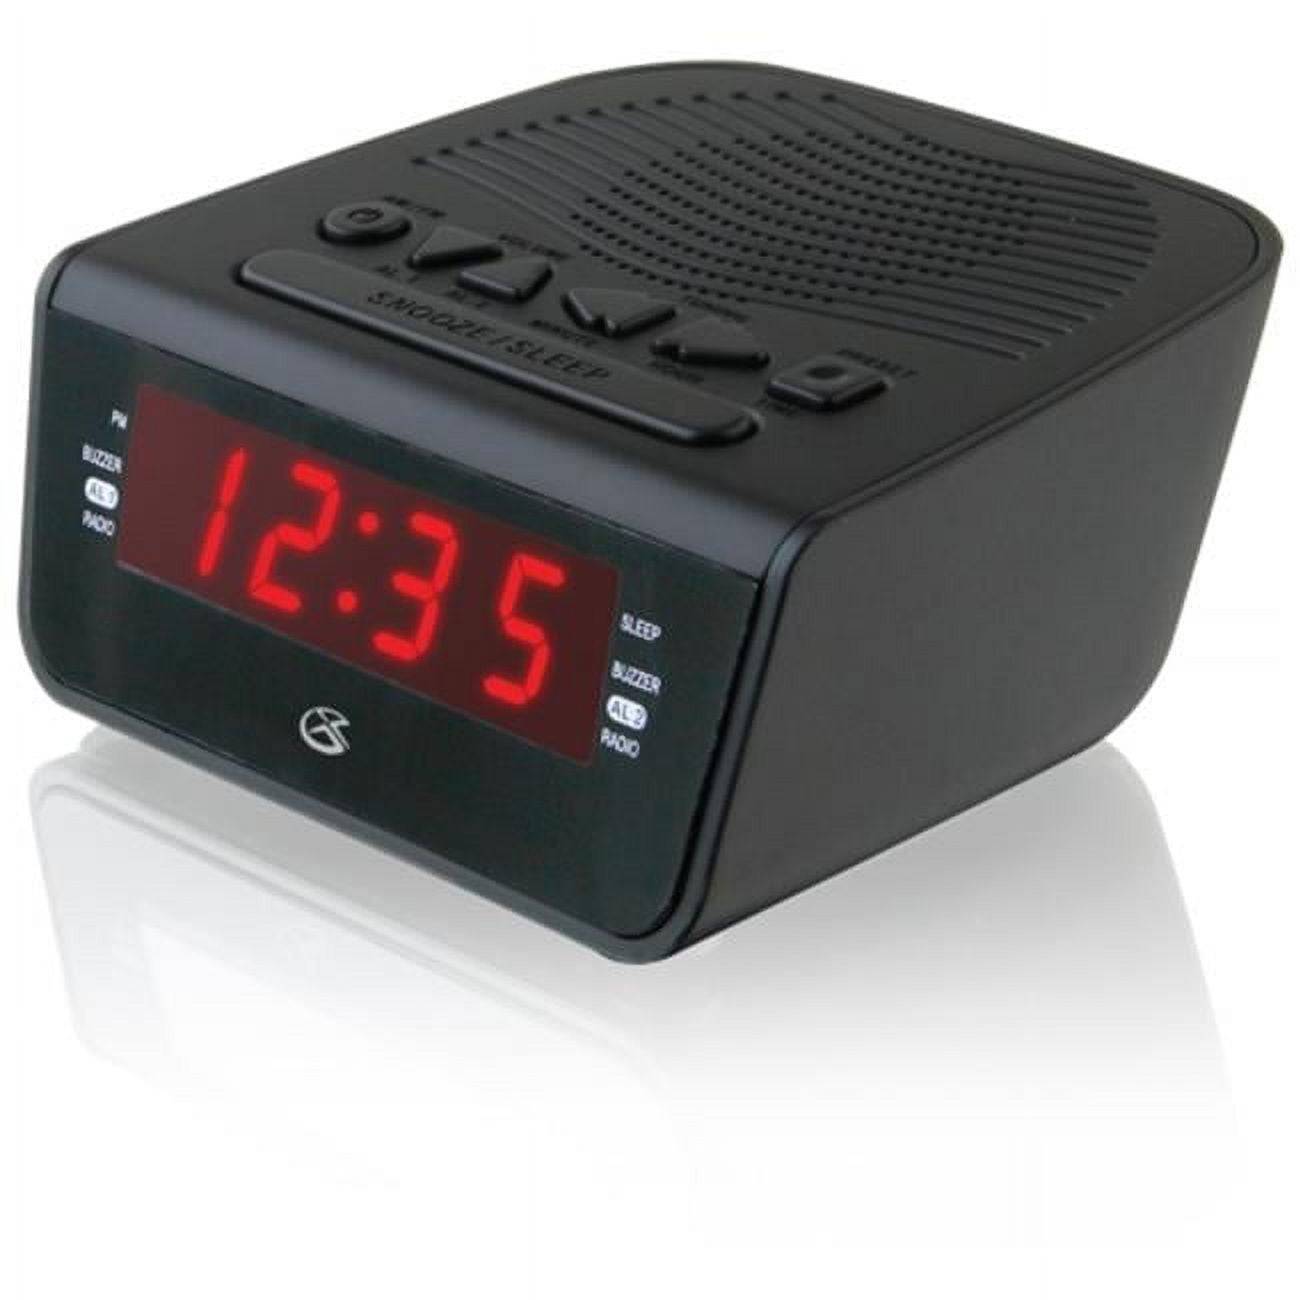 Radio reloj despertador digital FM